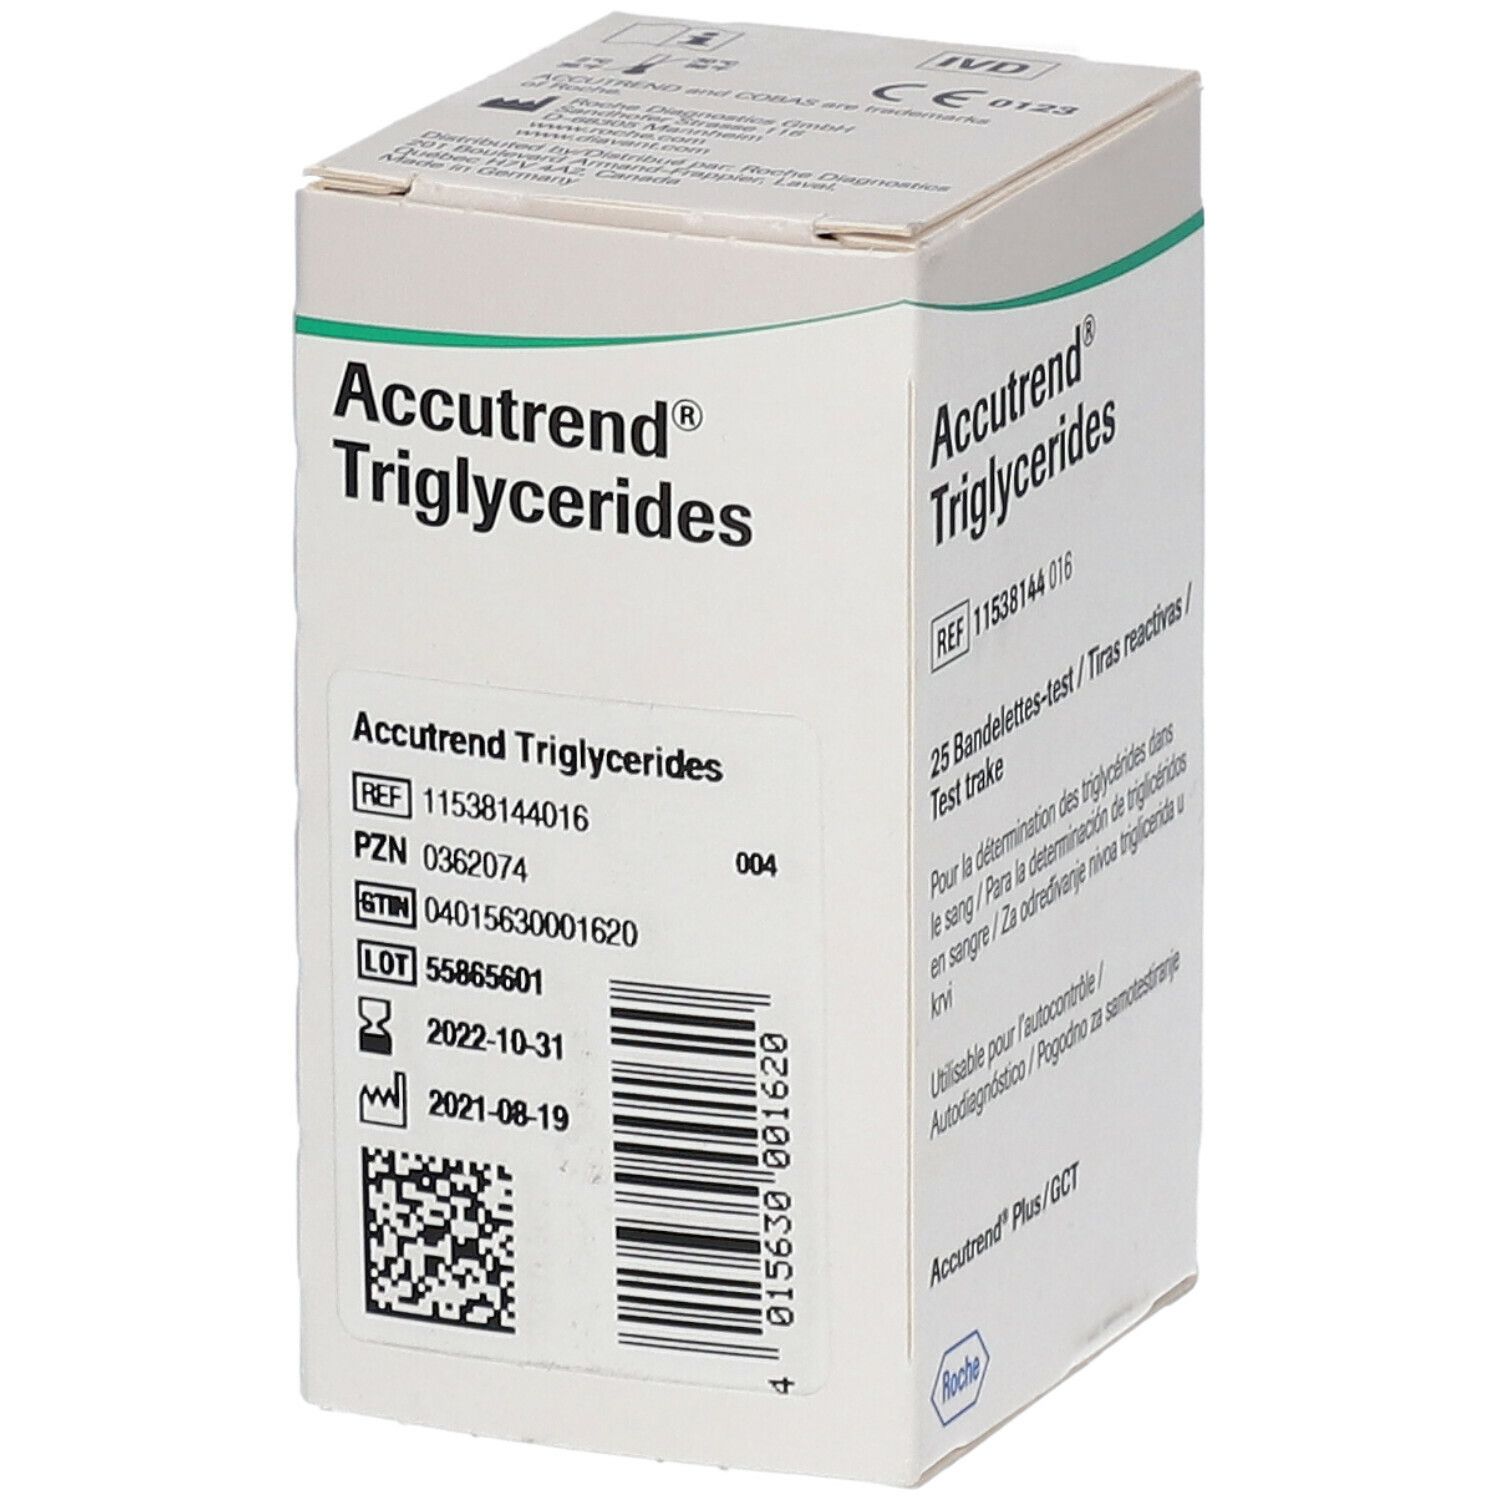 Accutrend Triglyceride